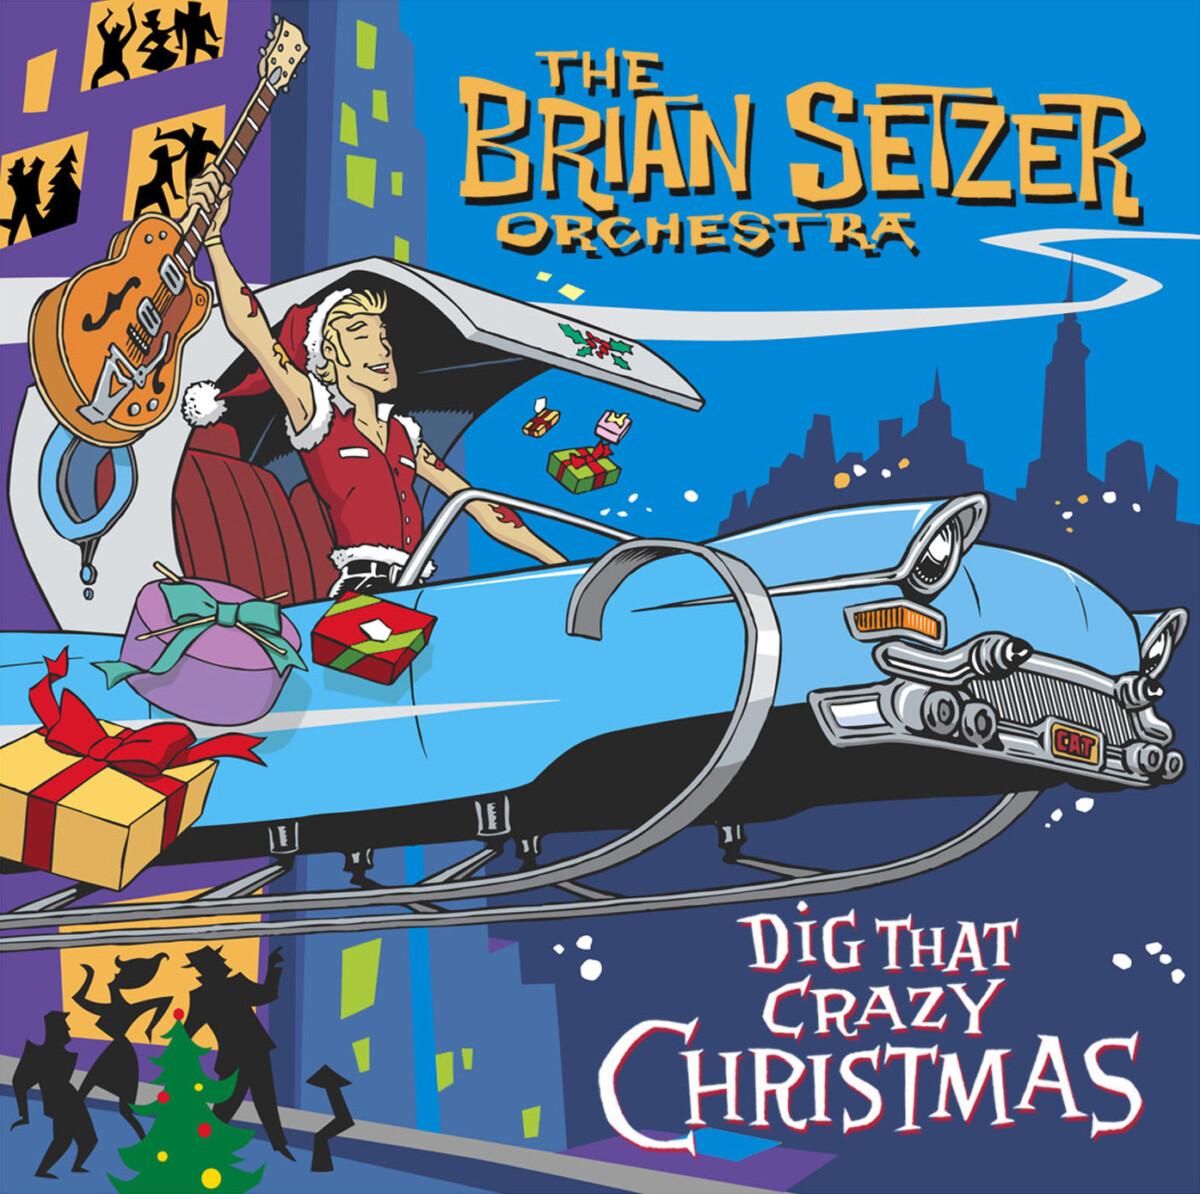 Brian Setzer Orchestra Dig that Crazy Christmas Surfdog Records